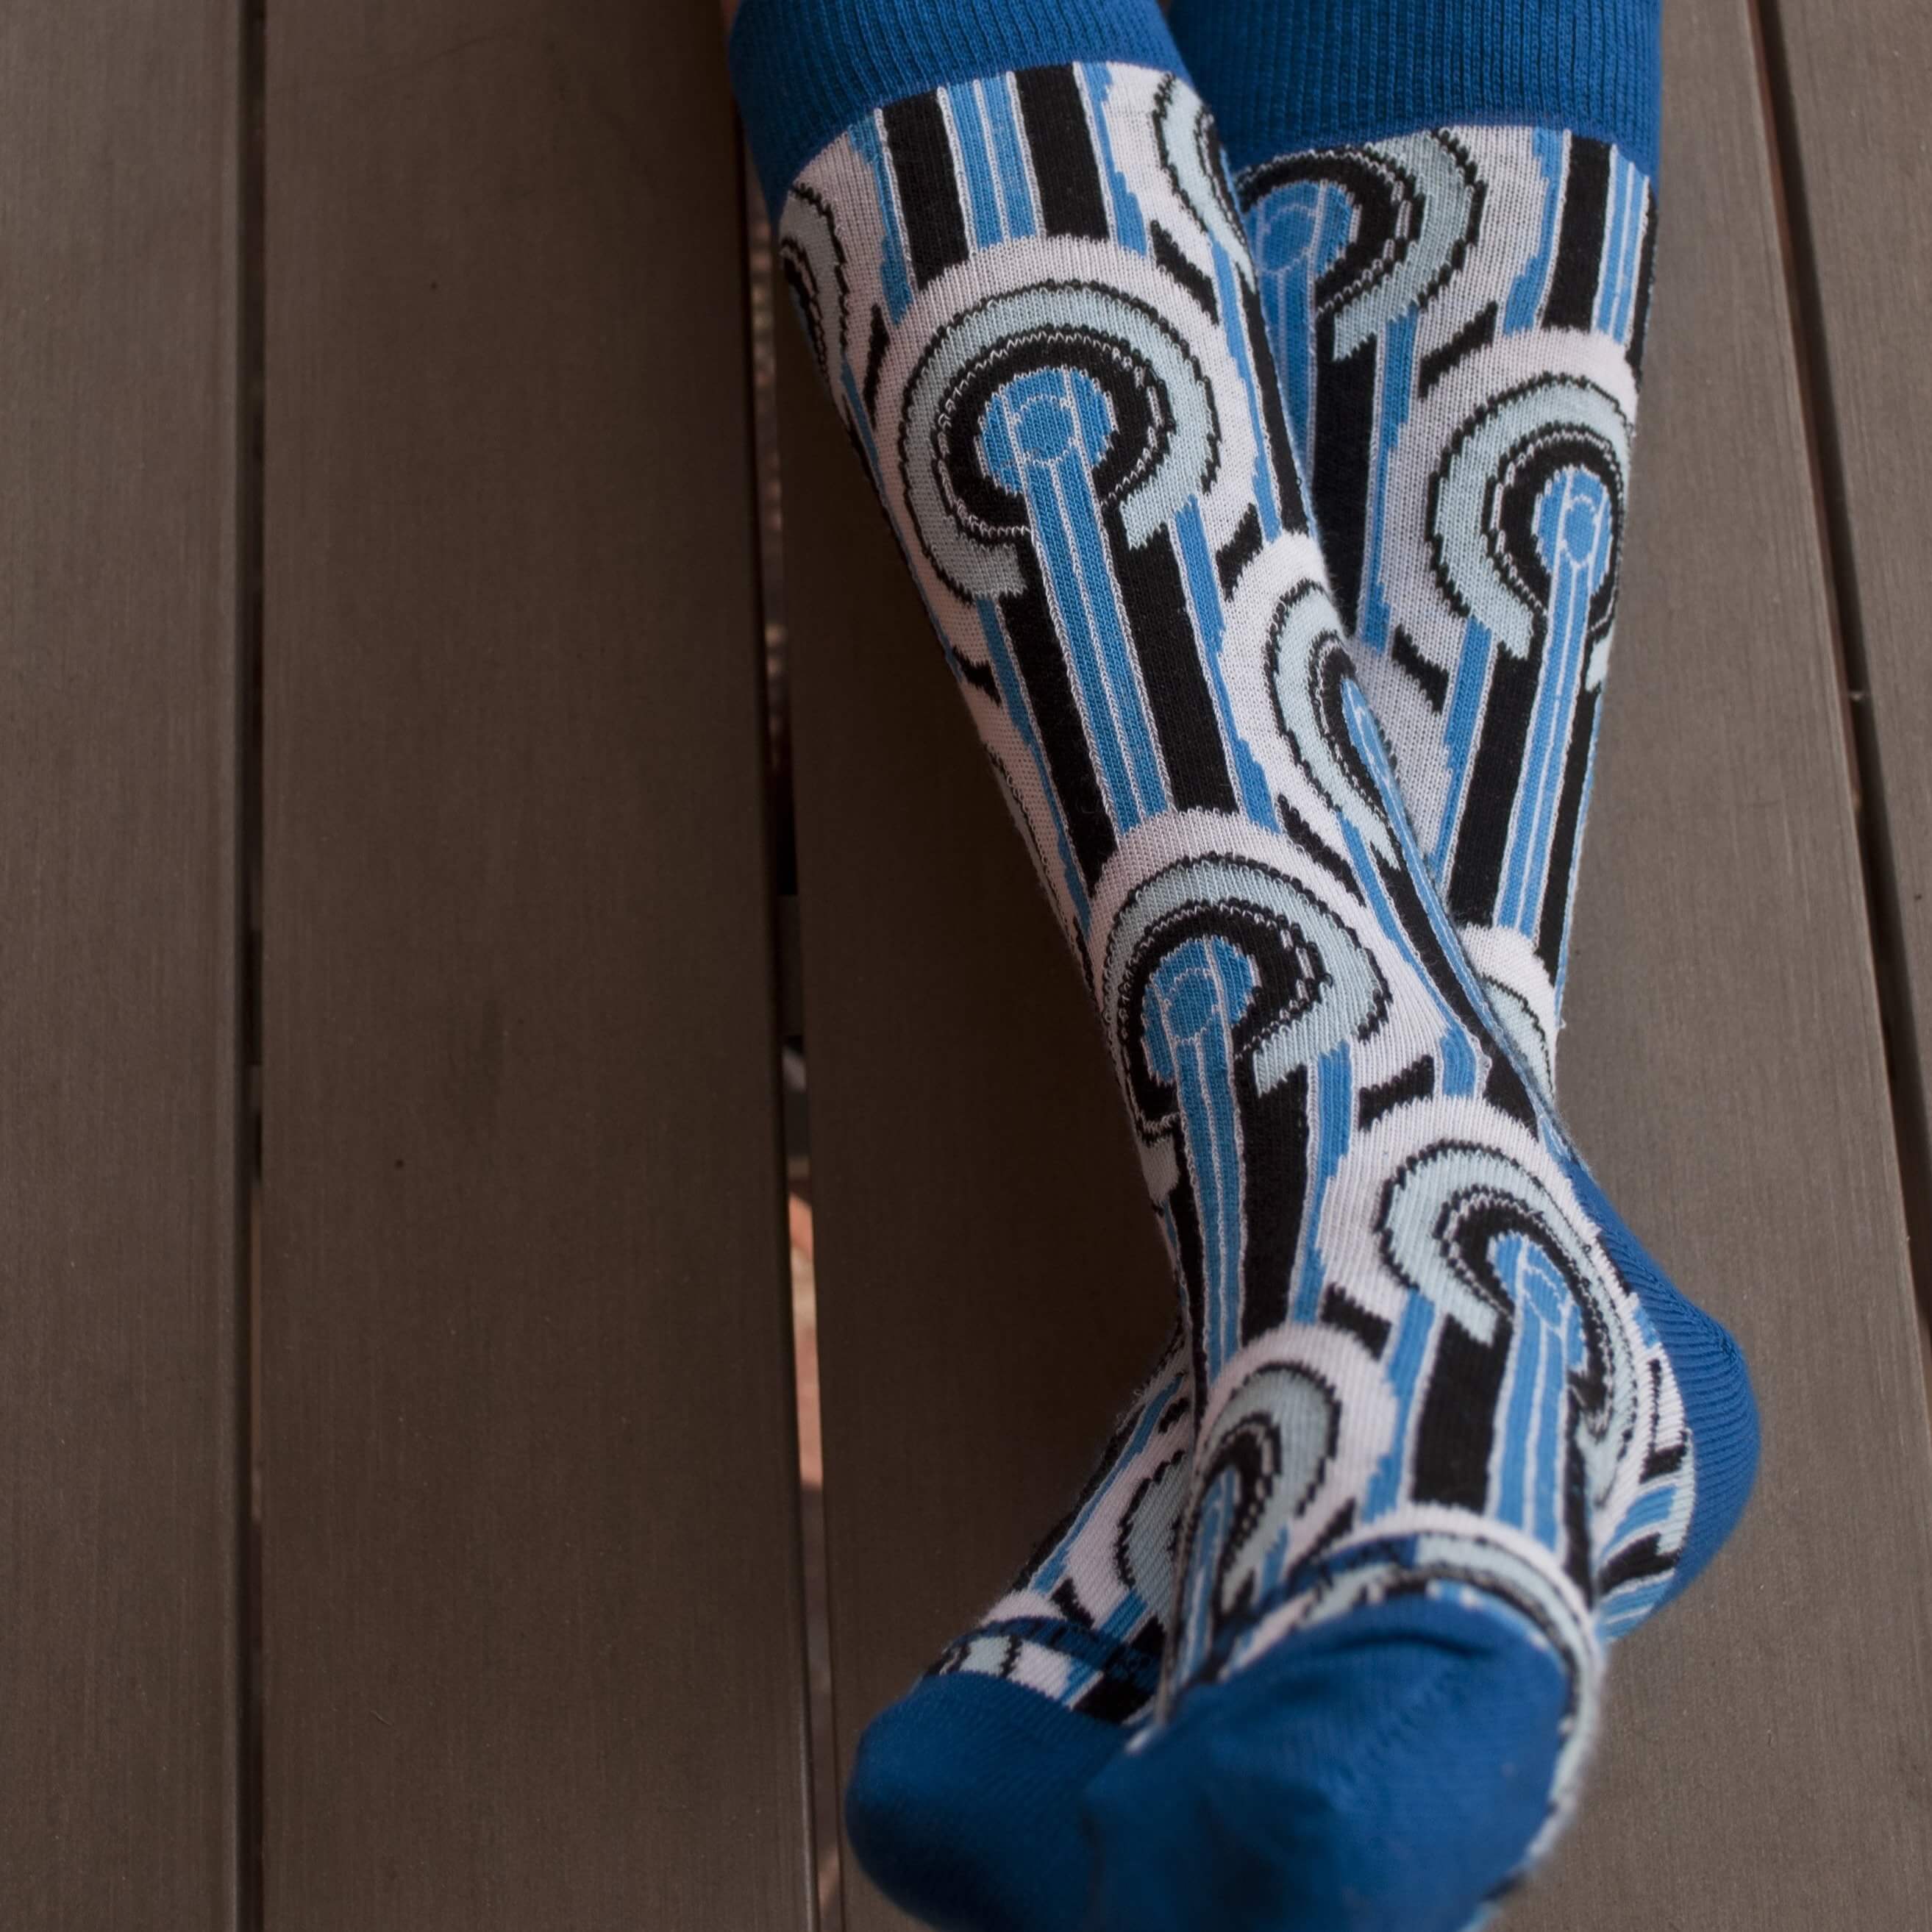 Art Deco Patterned Socks from the Sock Panda